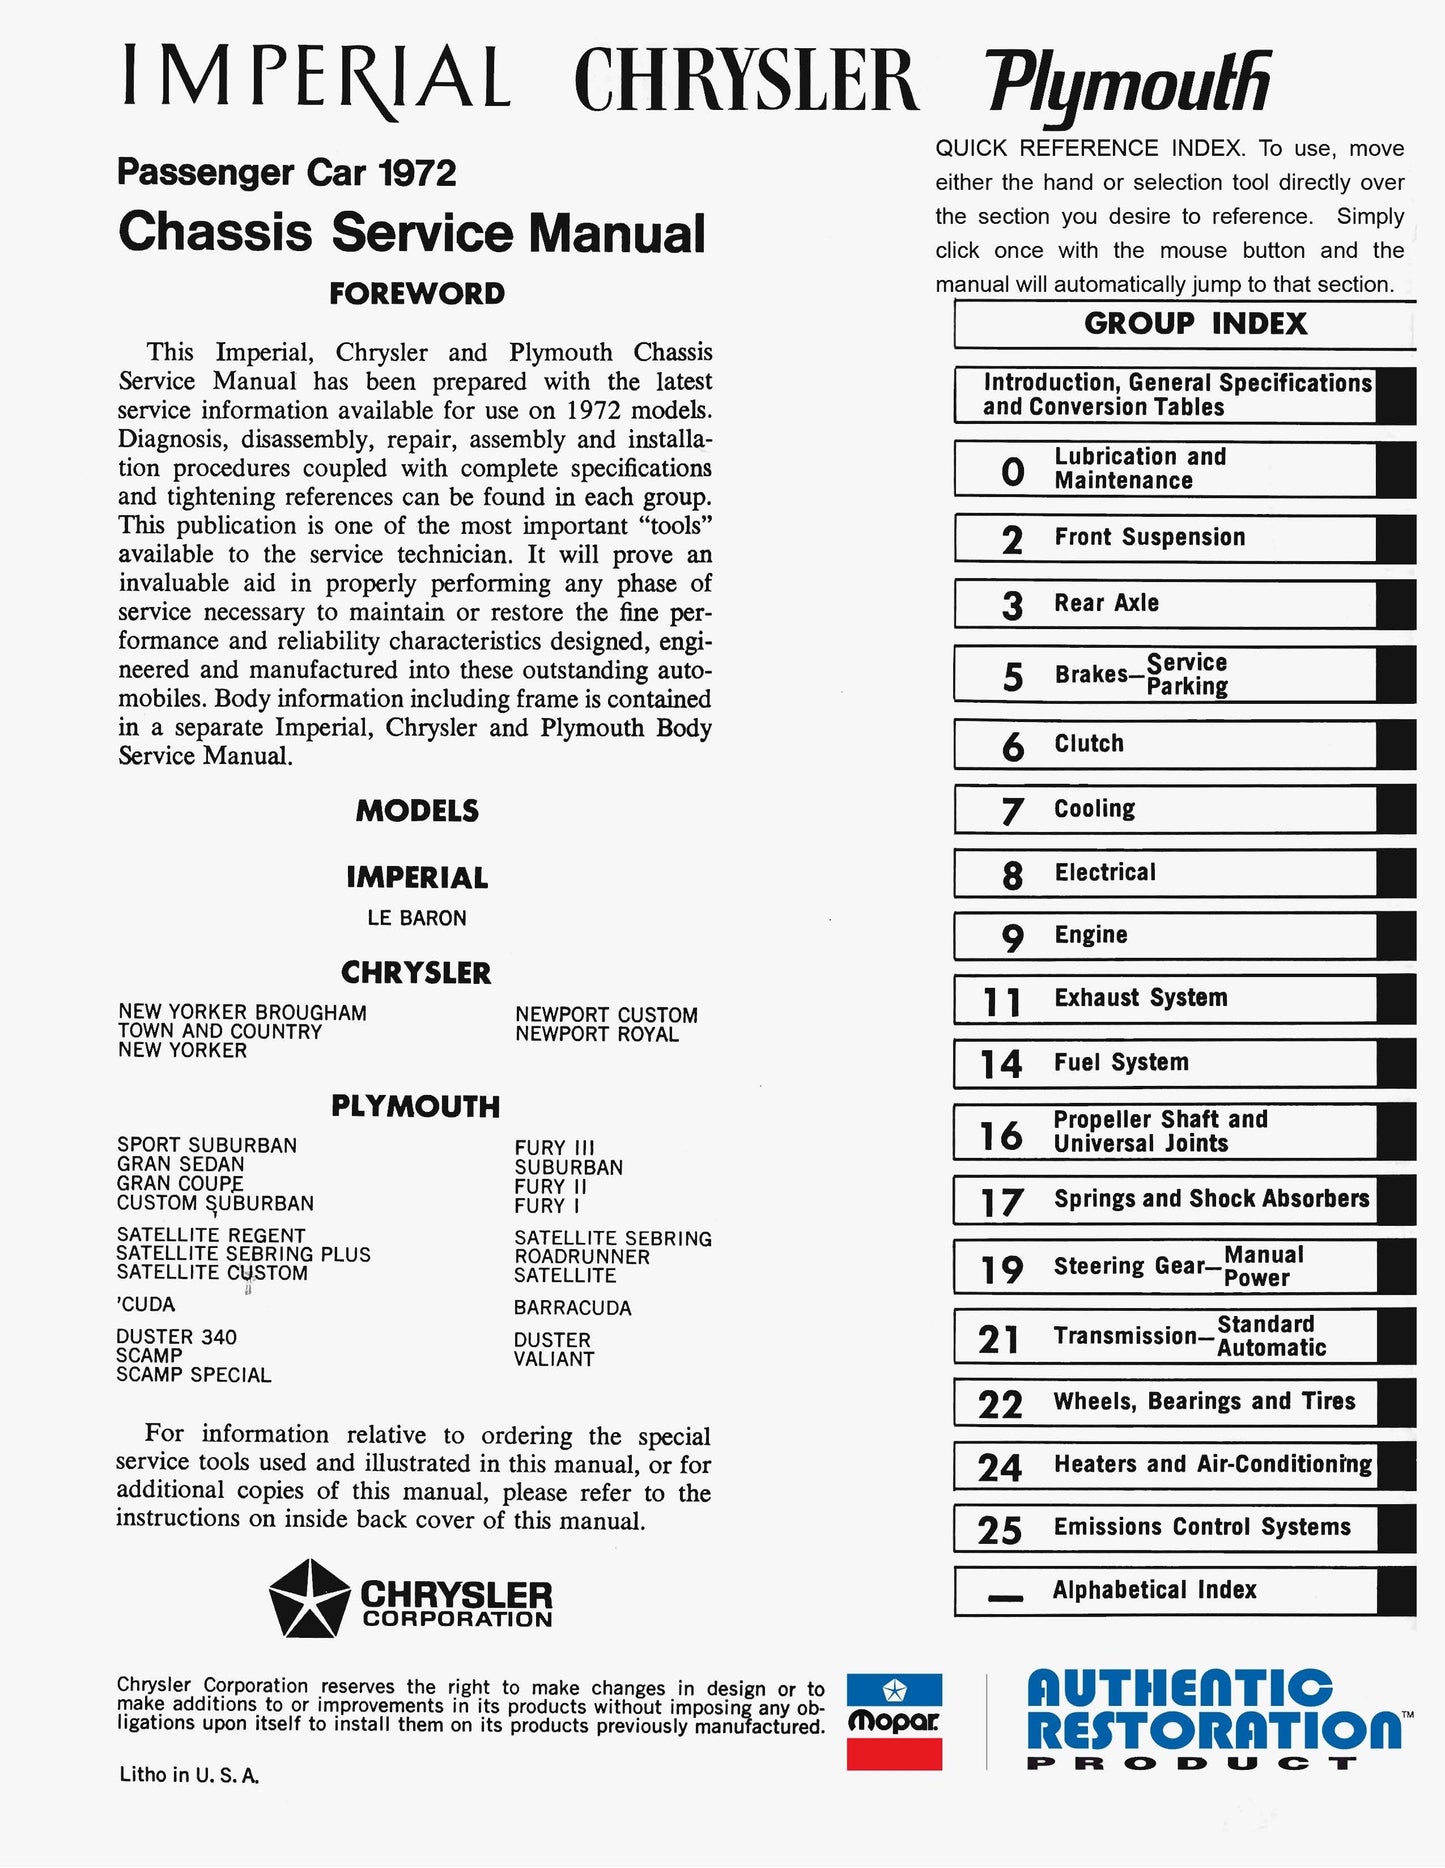 1972 Chrysler & Plymouth Shop Manual- All Models